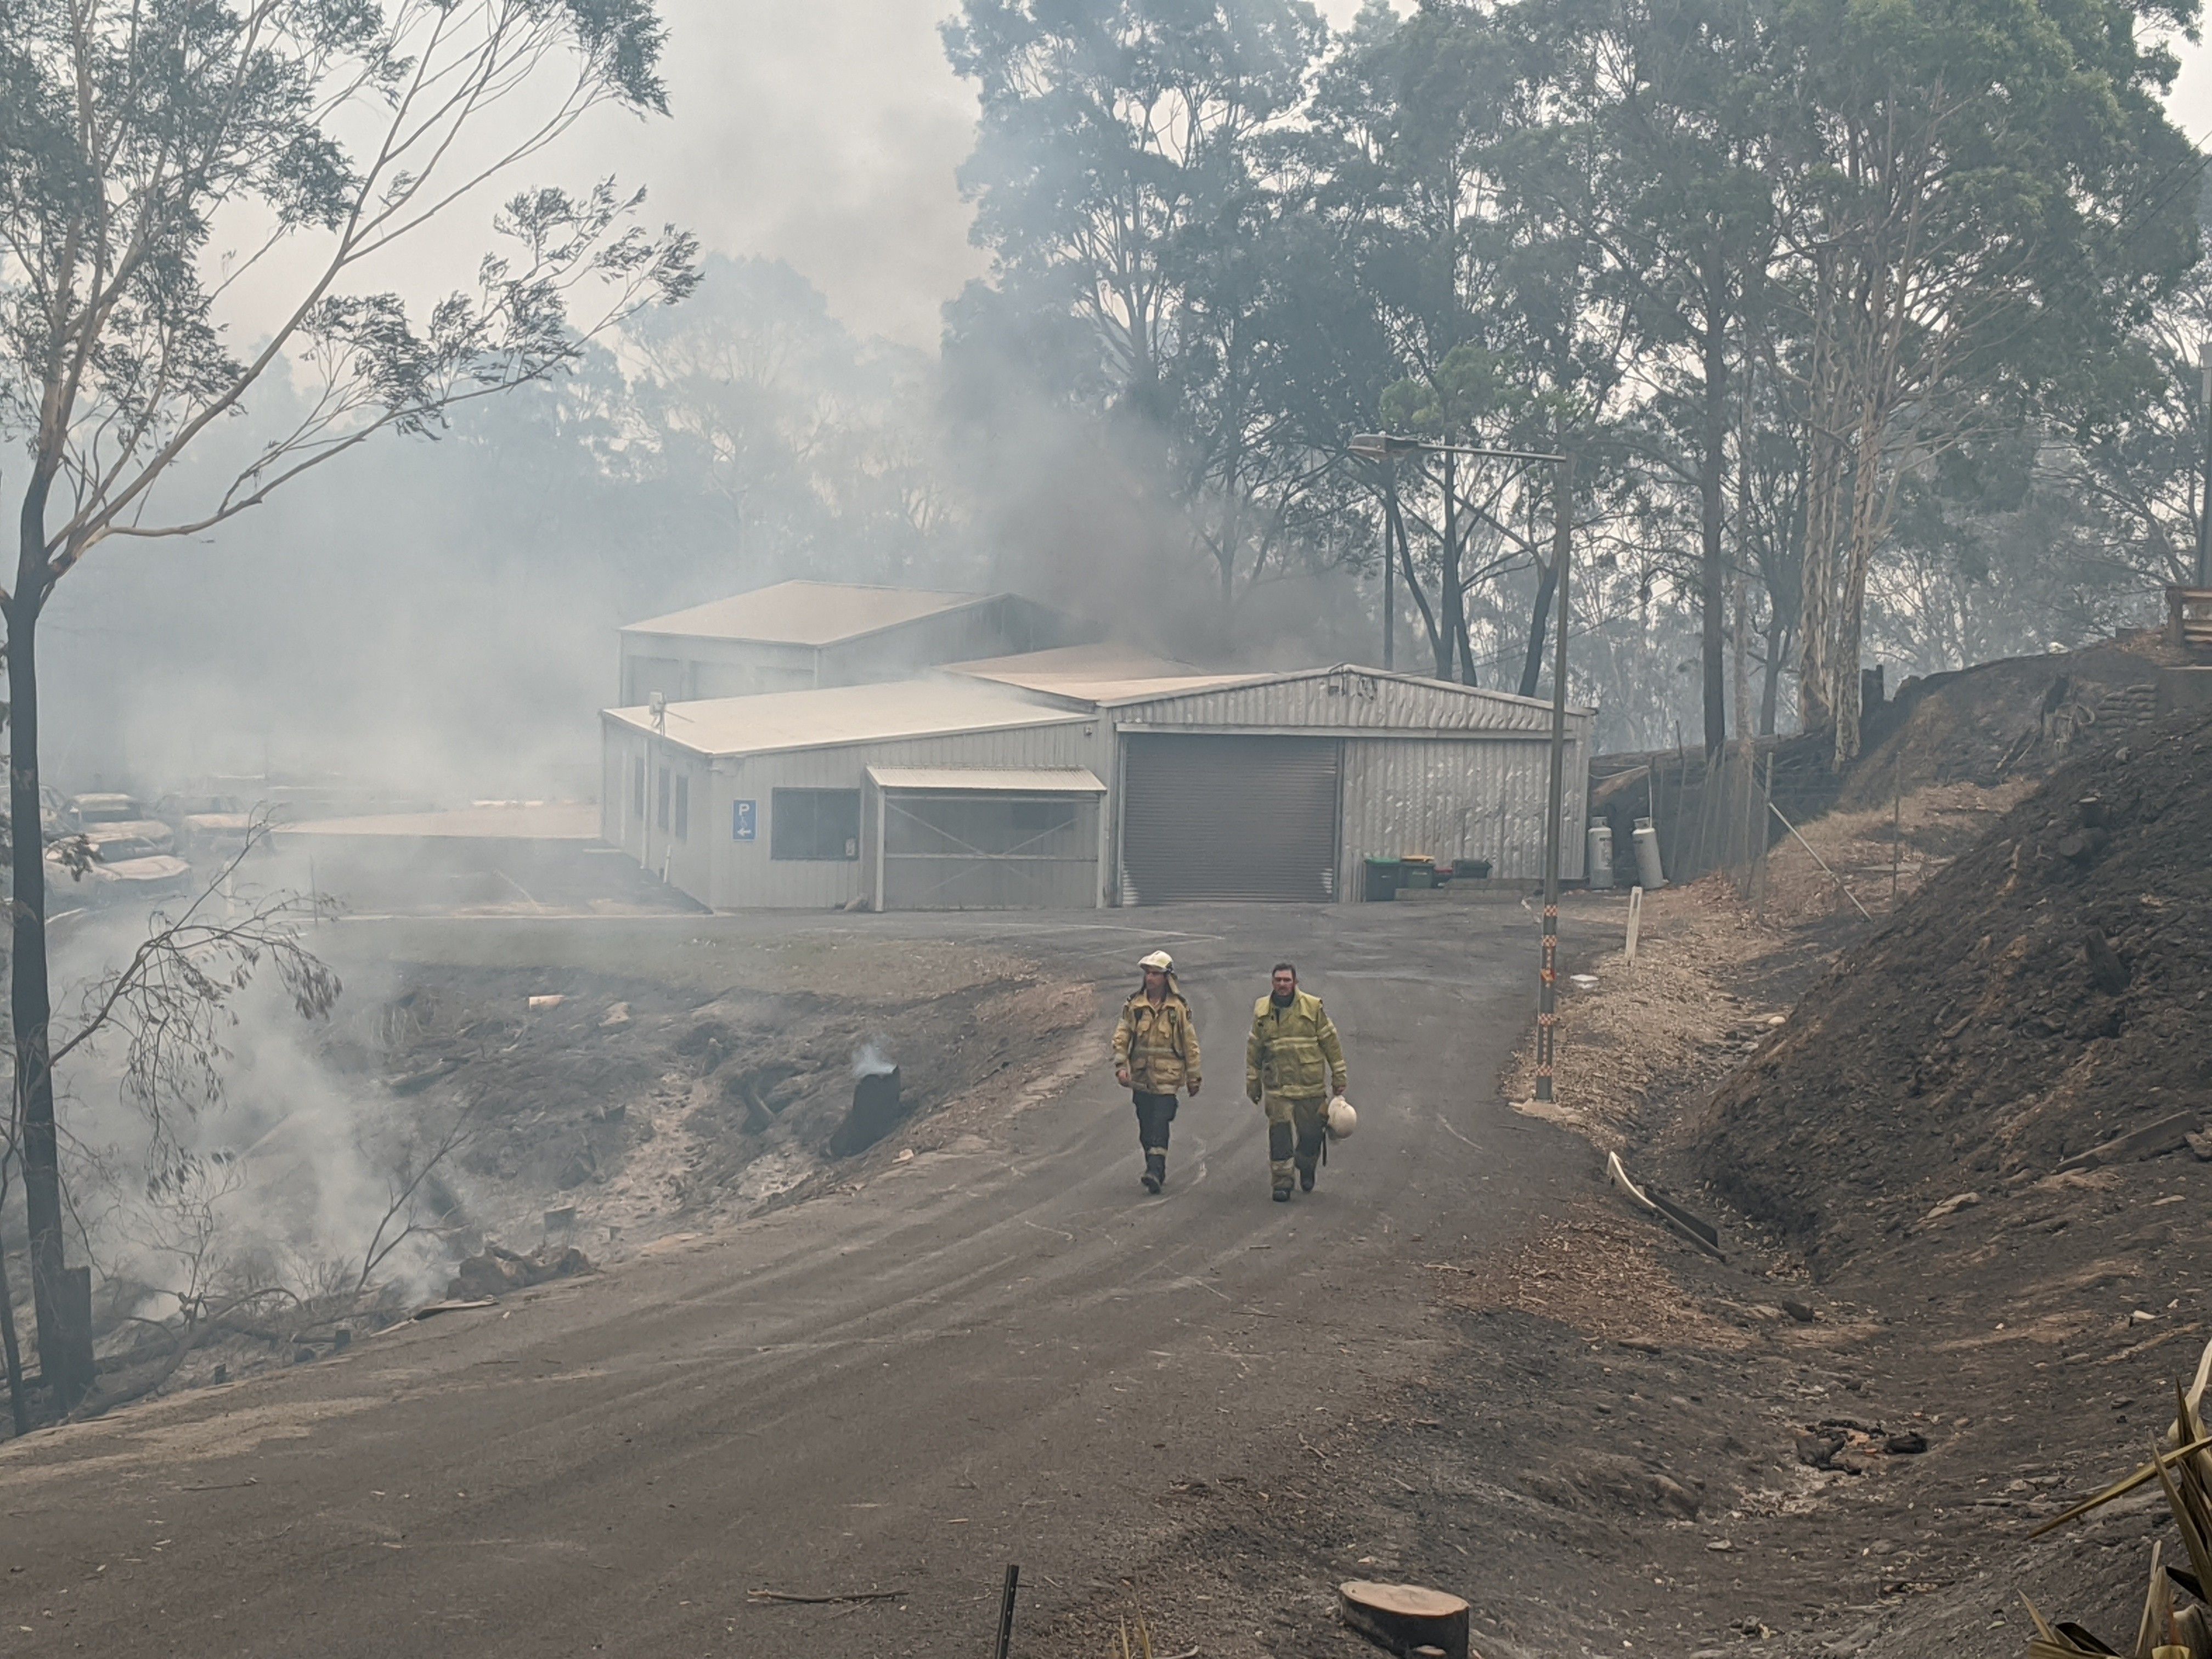 Two years on, $50 million bushfire grants announced for Eurobodalla and Bega